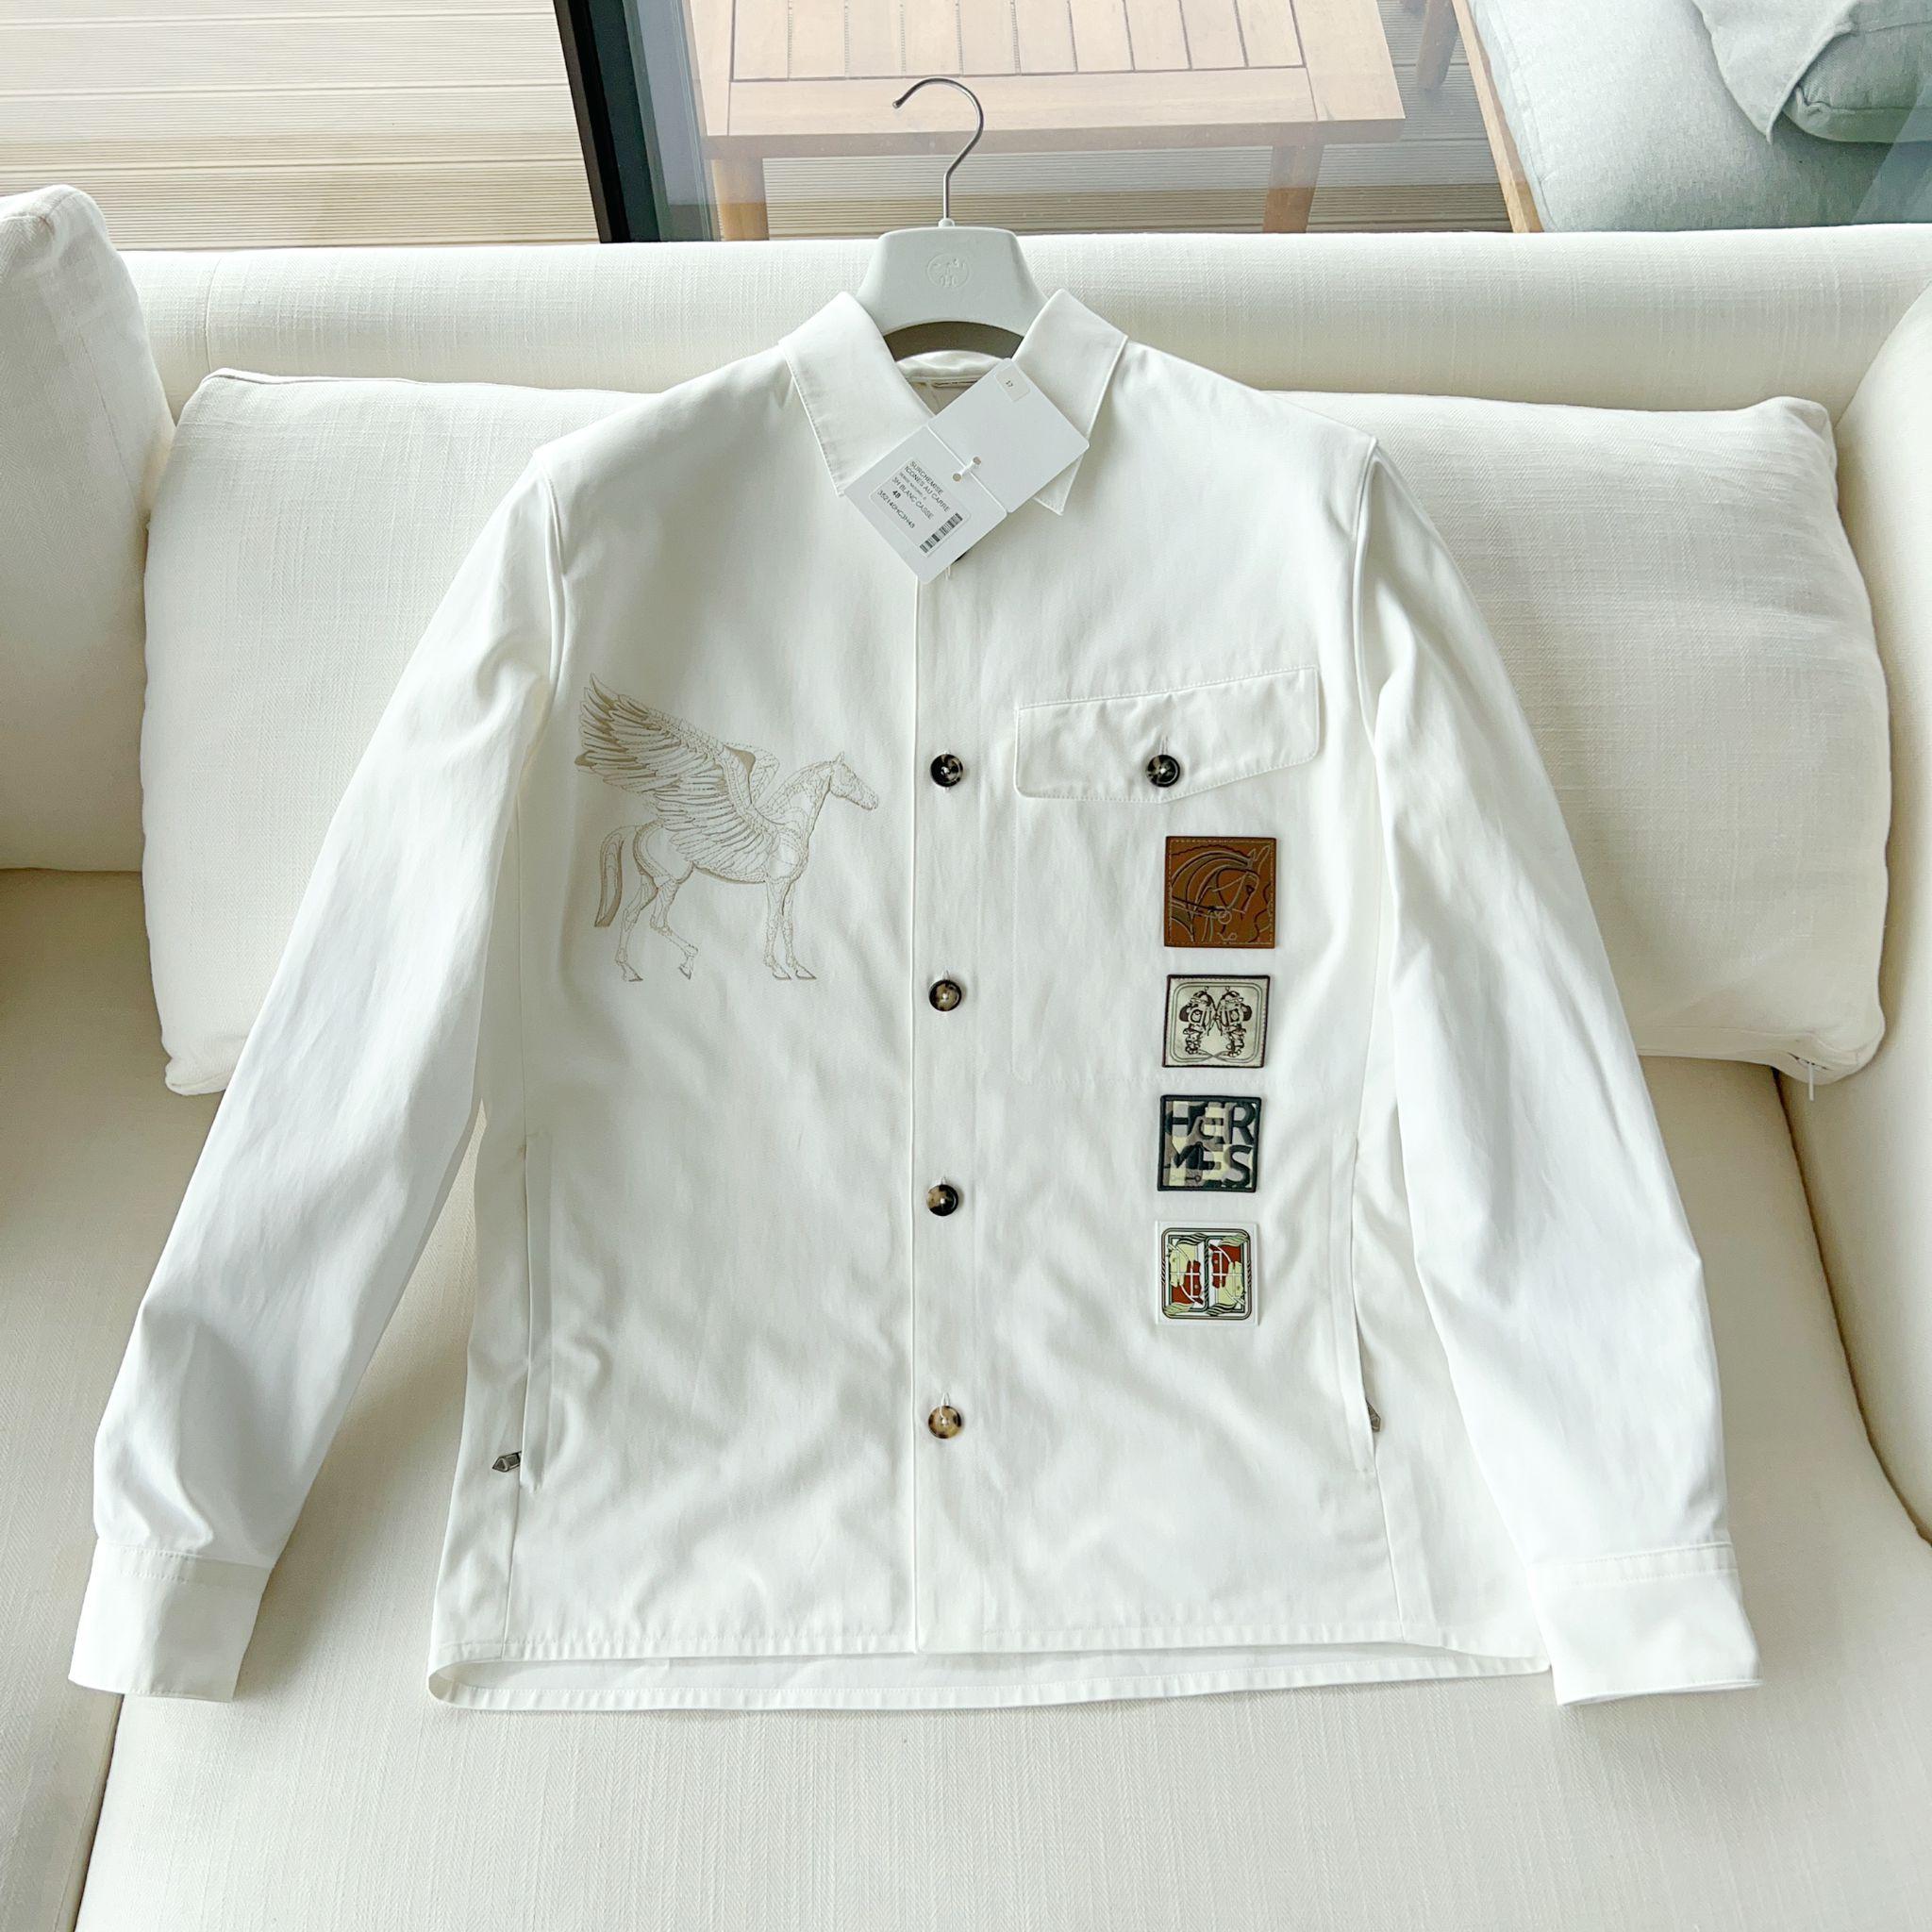 Hermès Men's 'Icones au Carre' Overshirt, White, 48 EU, Medium UK For Sale 7